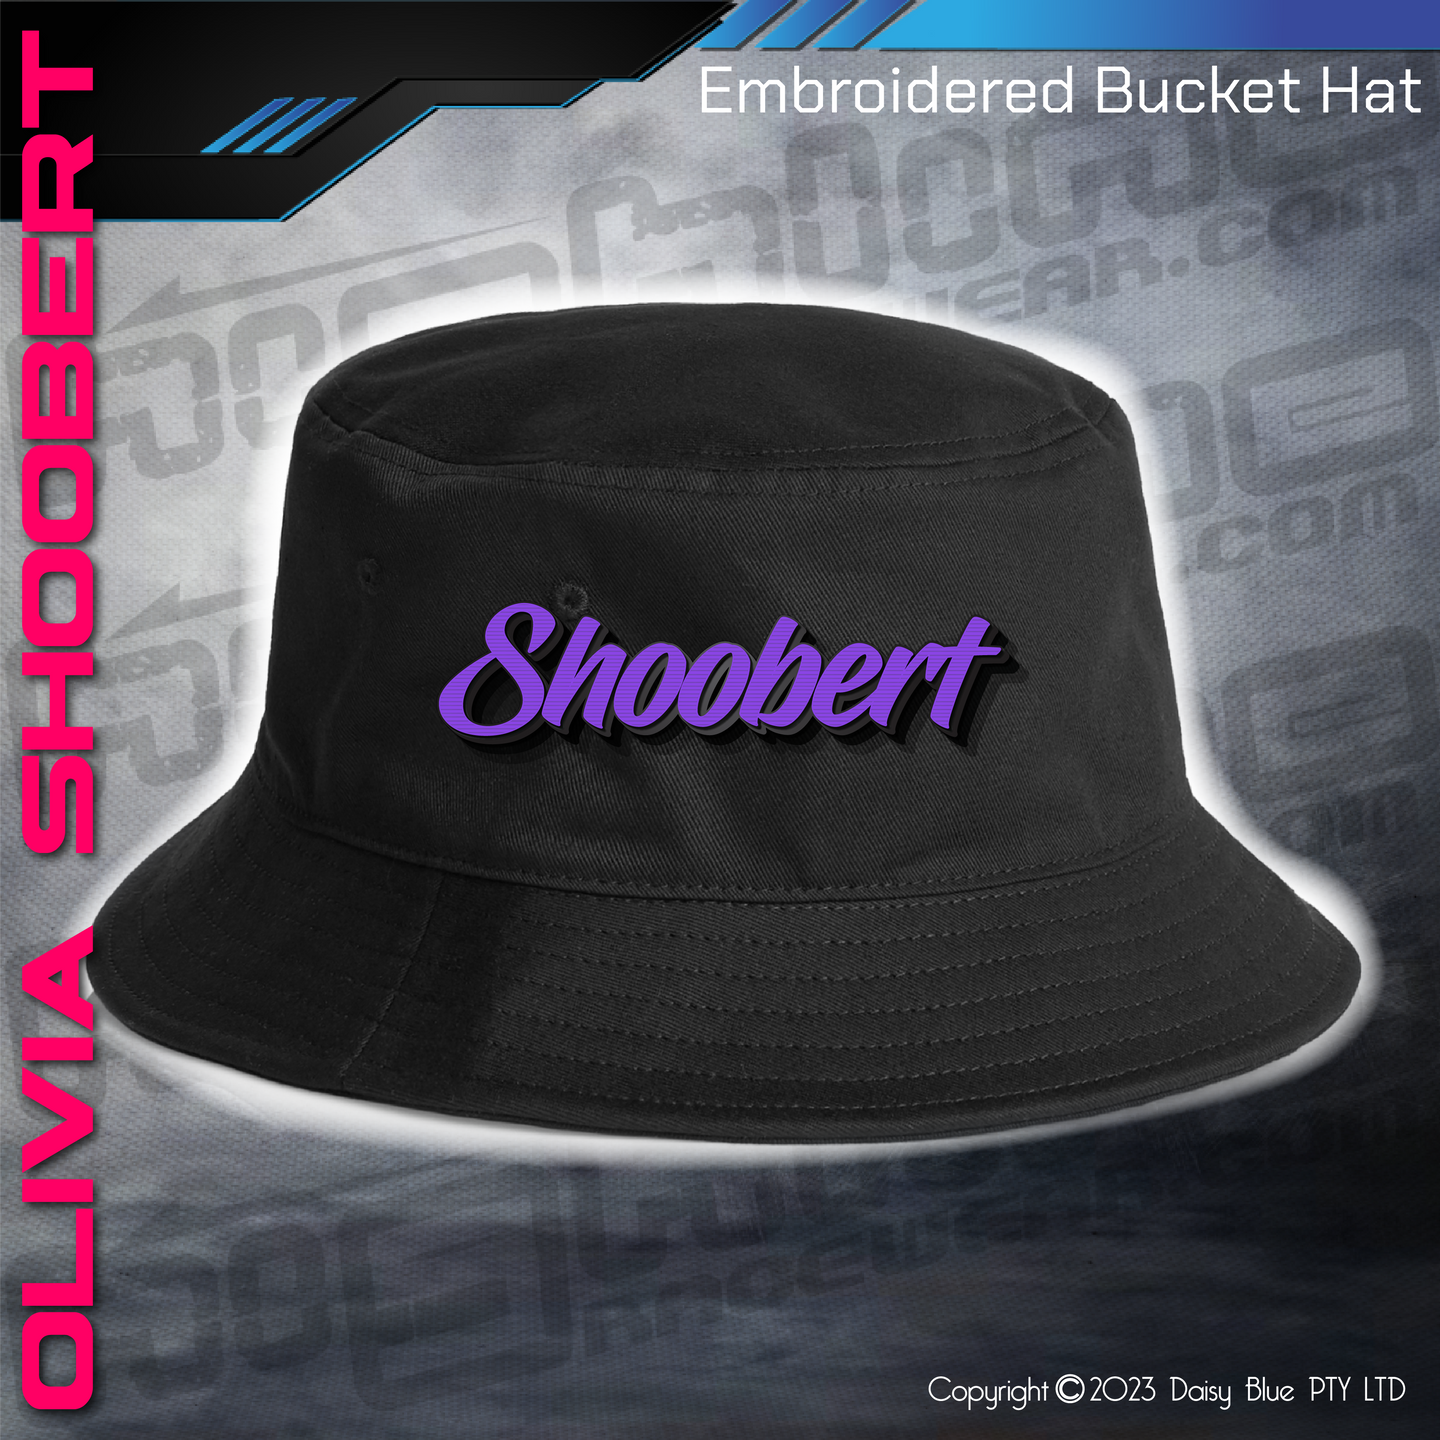 Embroidered Bucket Hat - Olivia Shoobert